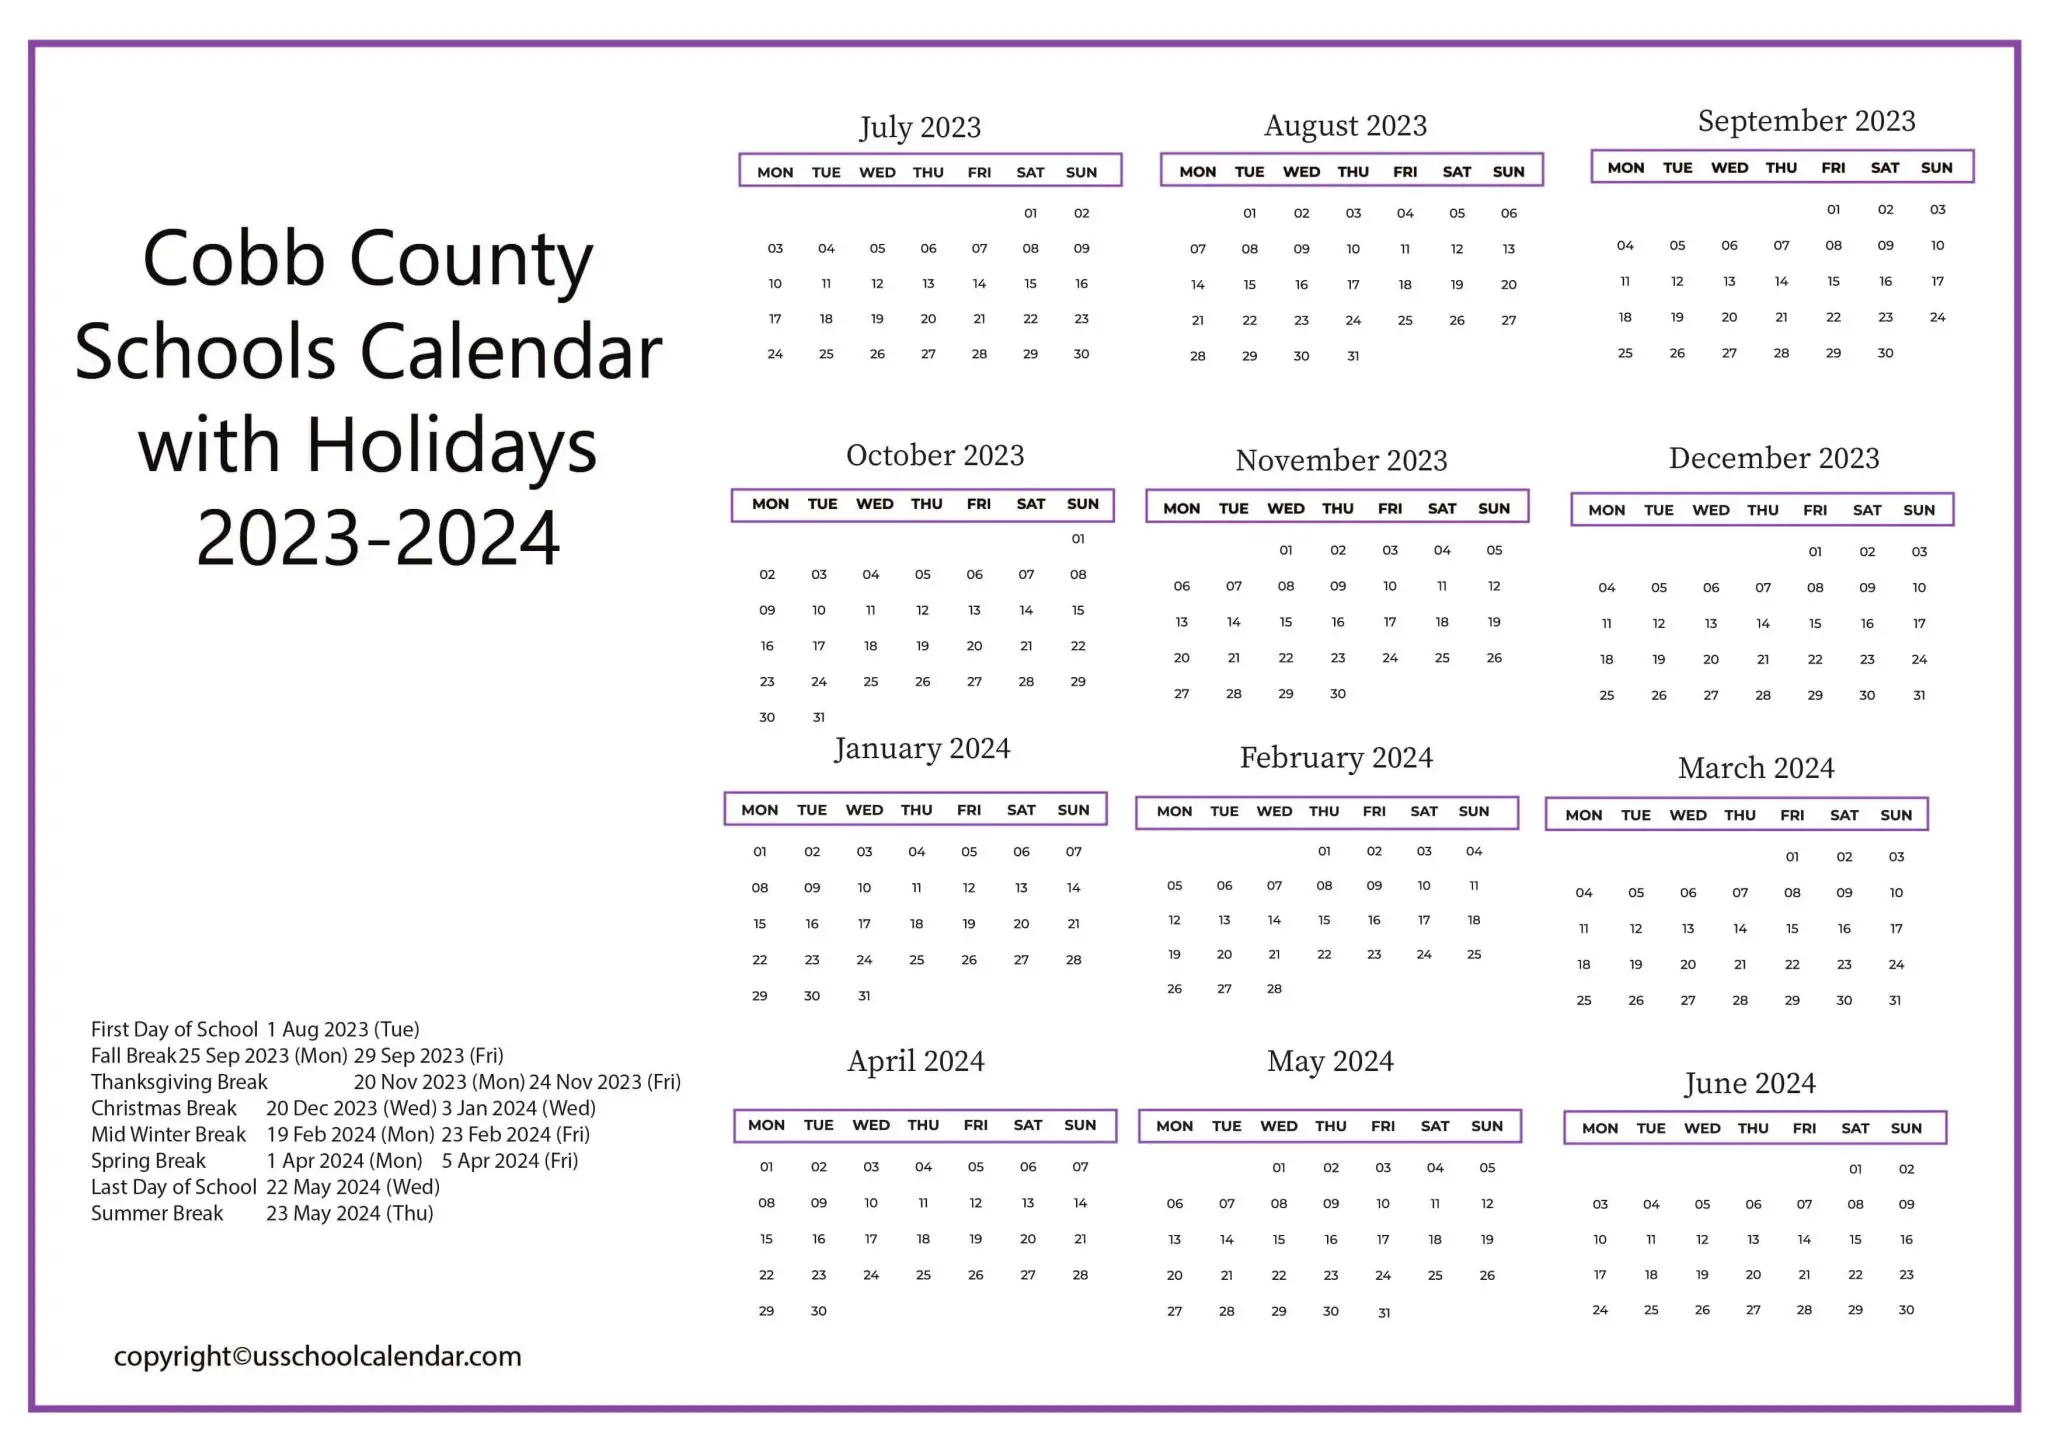 cobb-county-schools-calendar-with-holidays-2023-2024